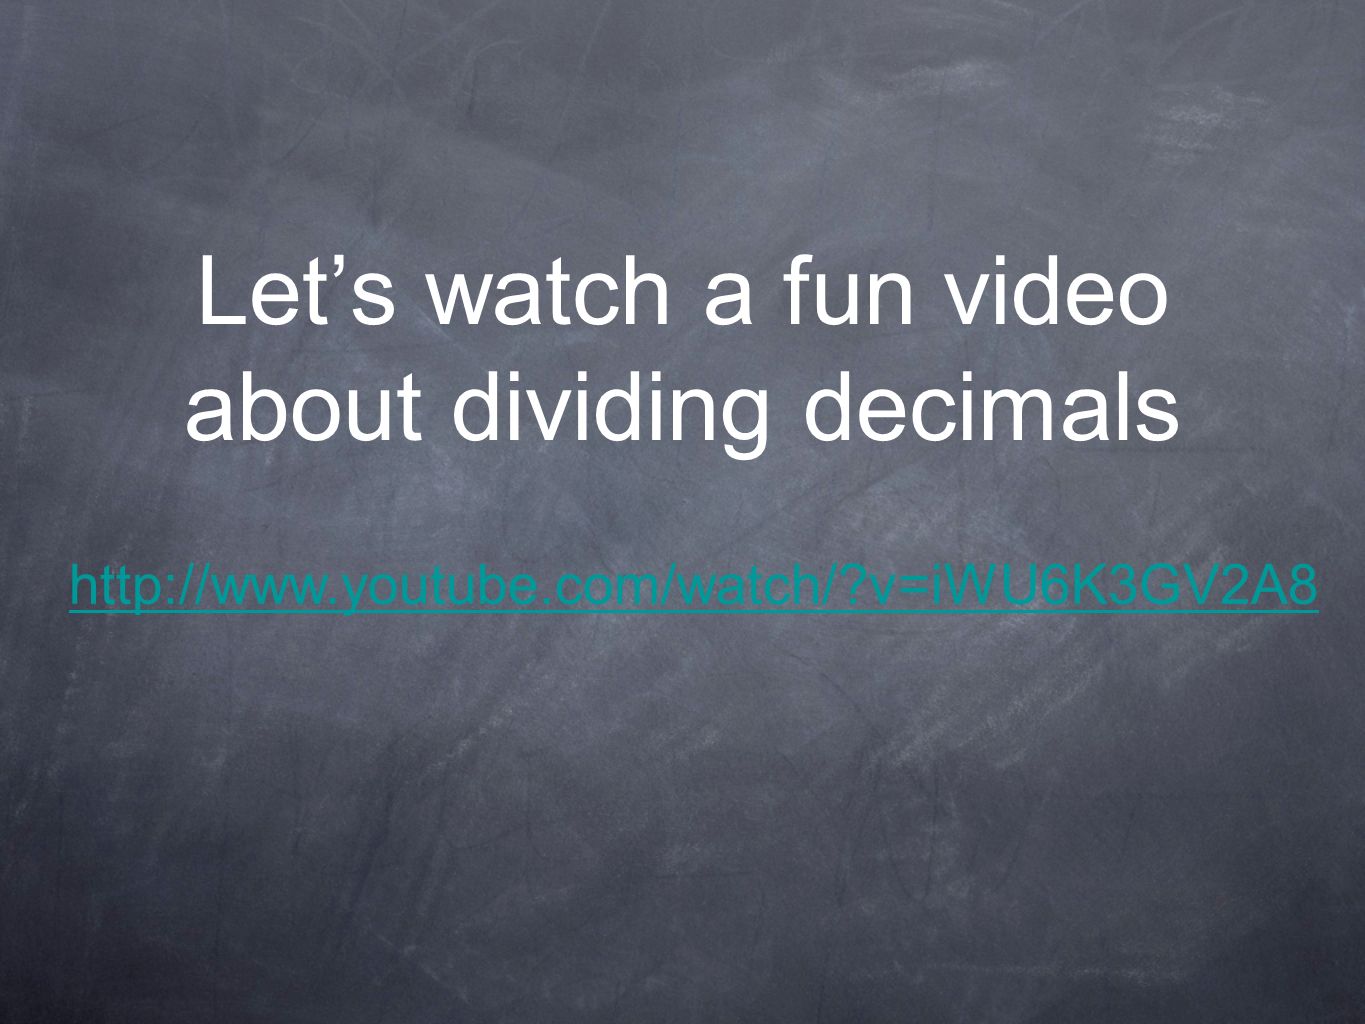 Let’s watch a fun video about dividing decimals